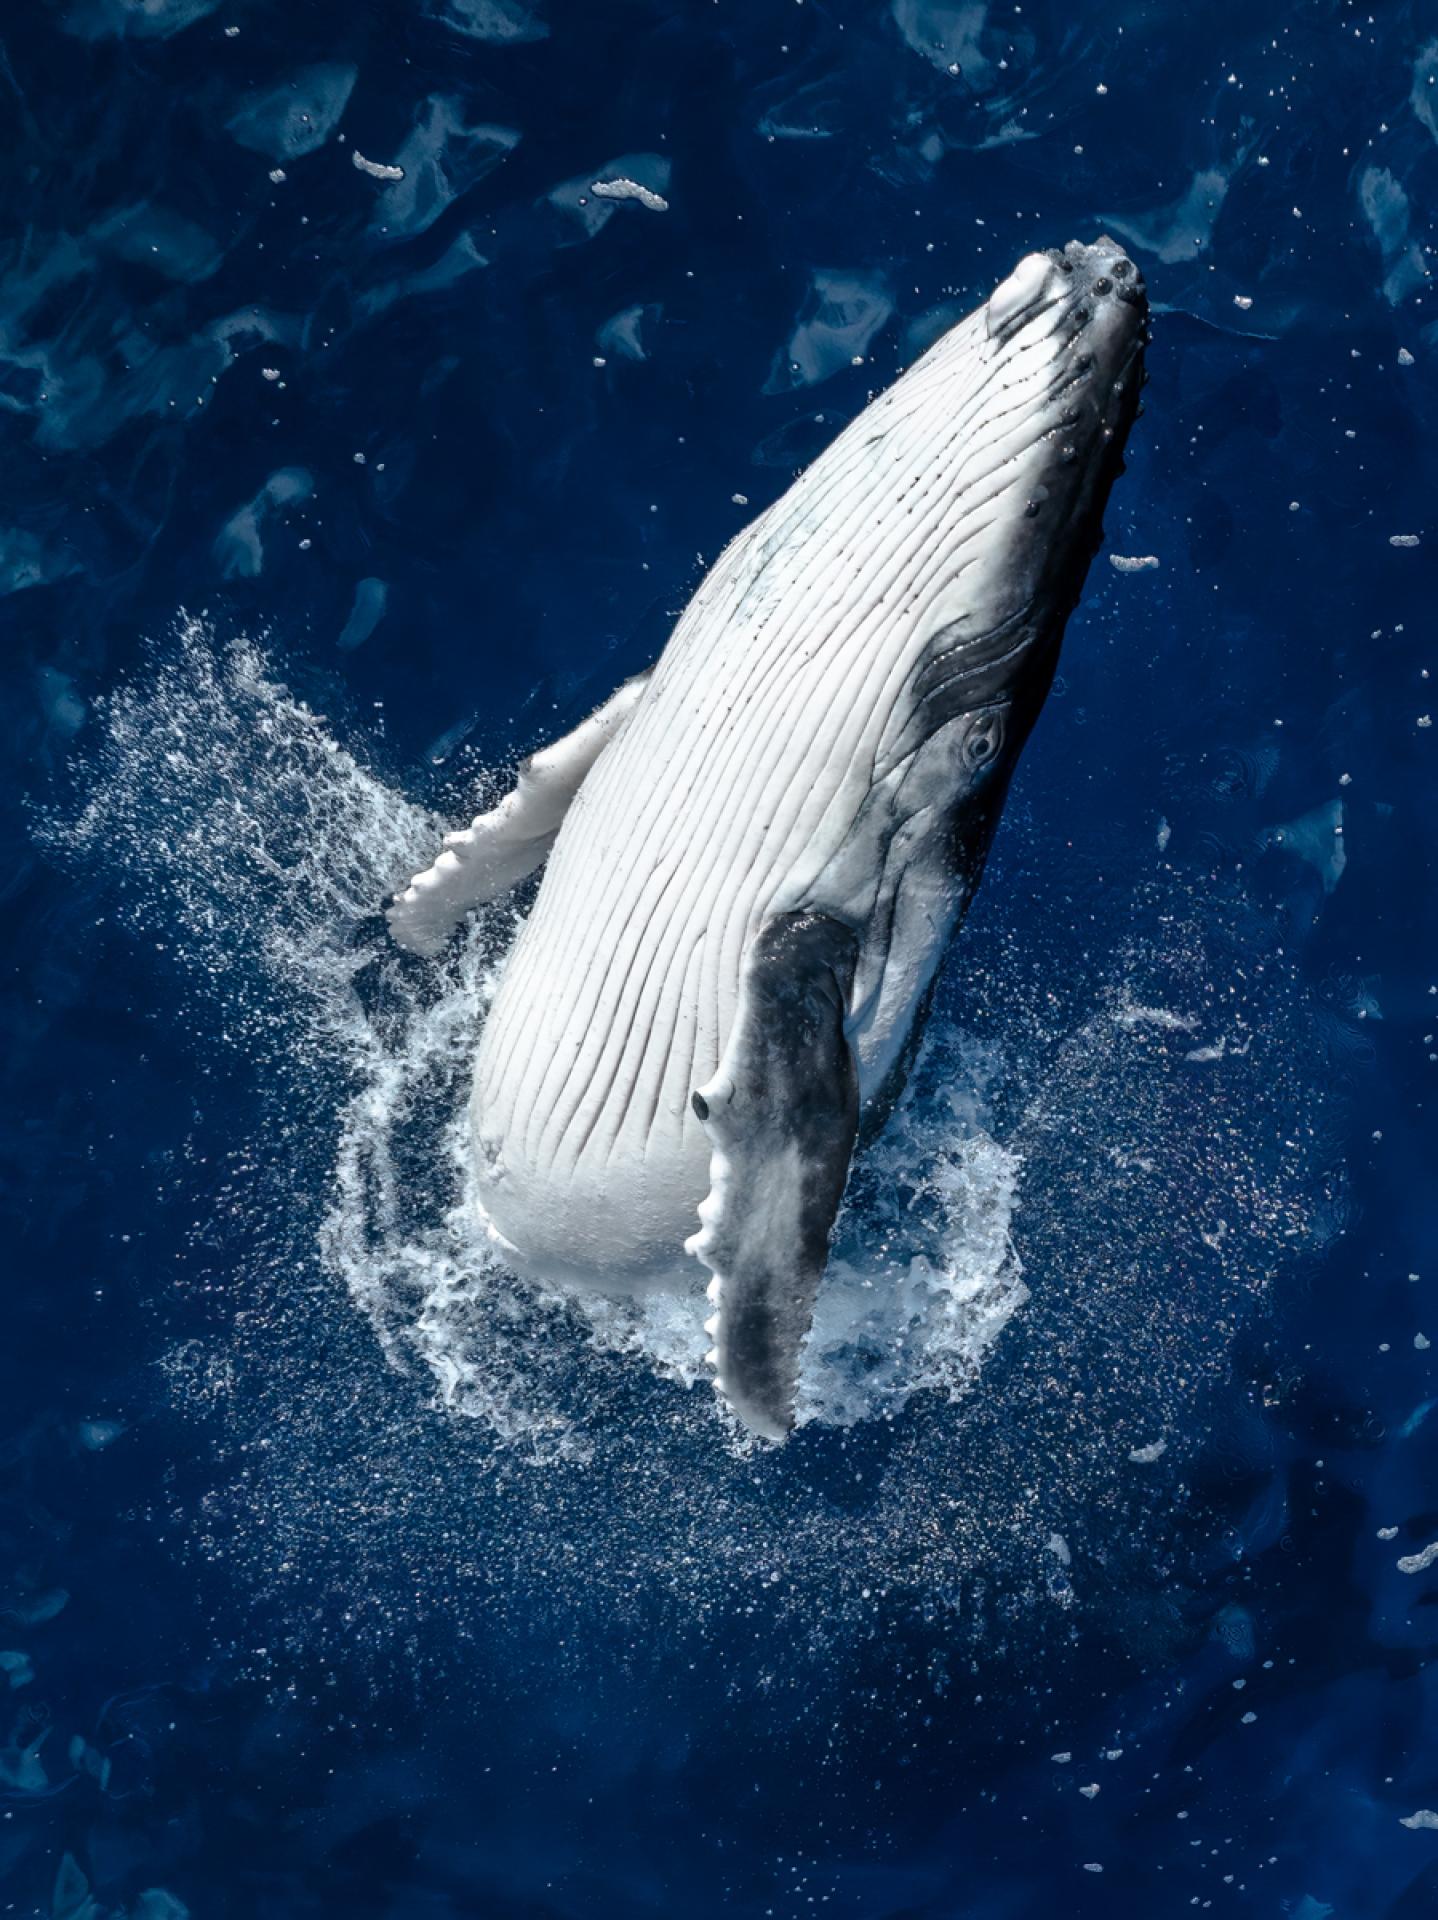 London Photography Awards Winner - Whale Breach